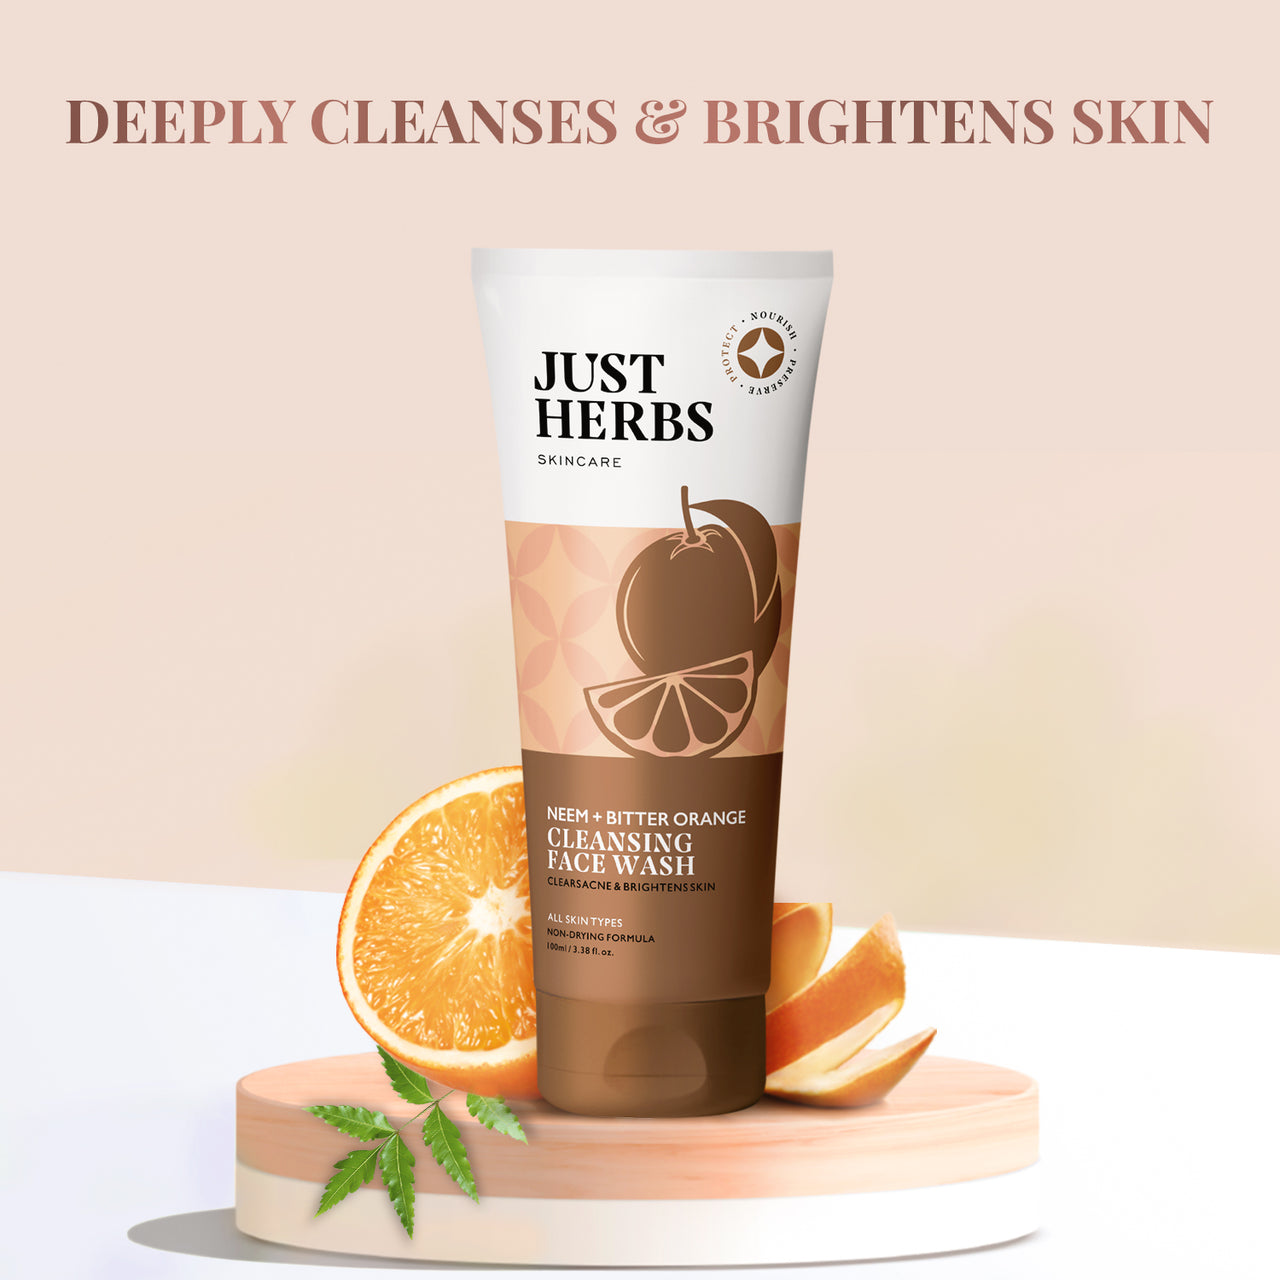 Cleansing Face Wash with Neem and Bitter Orange / Silksplash